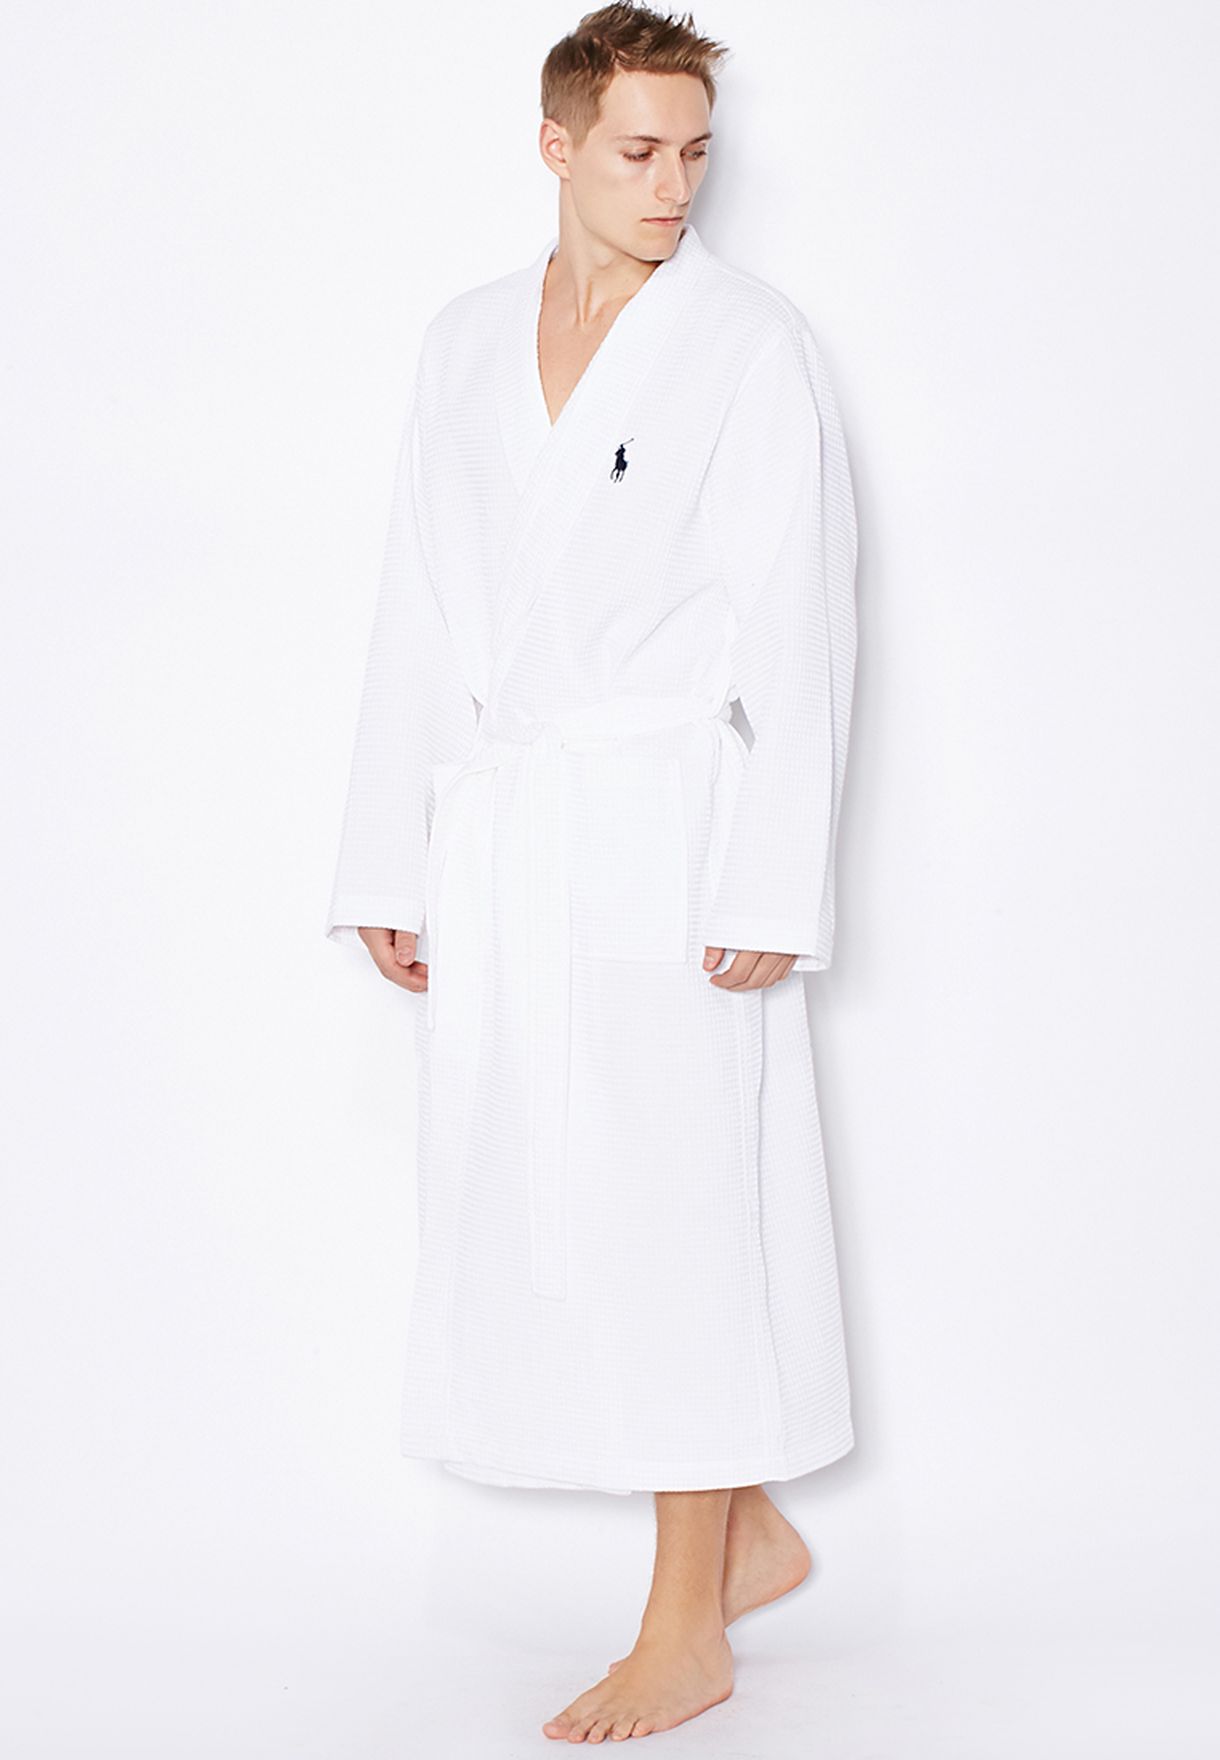 ralph lauren white robe